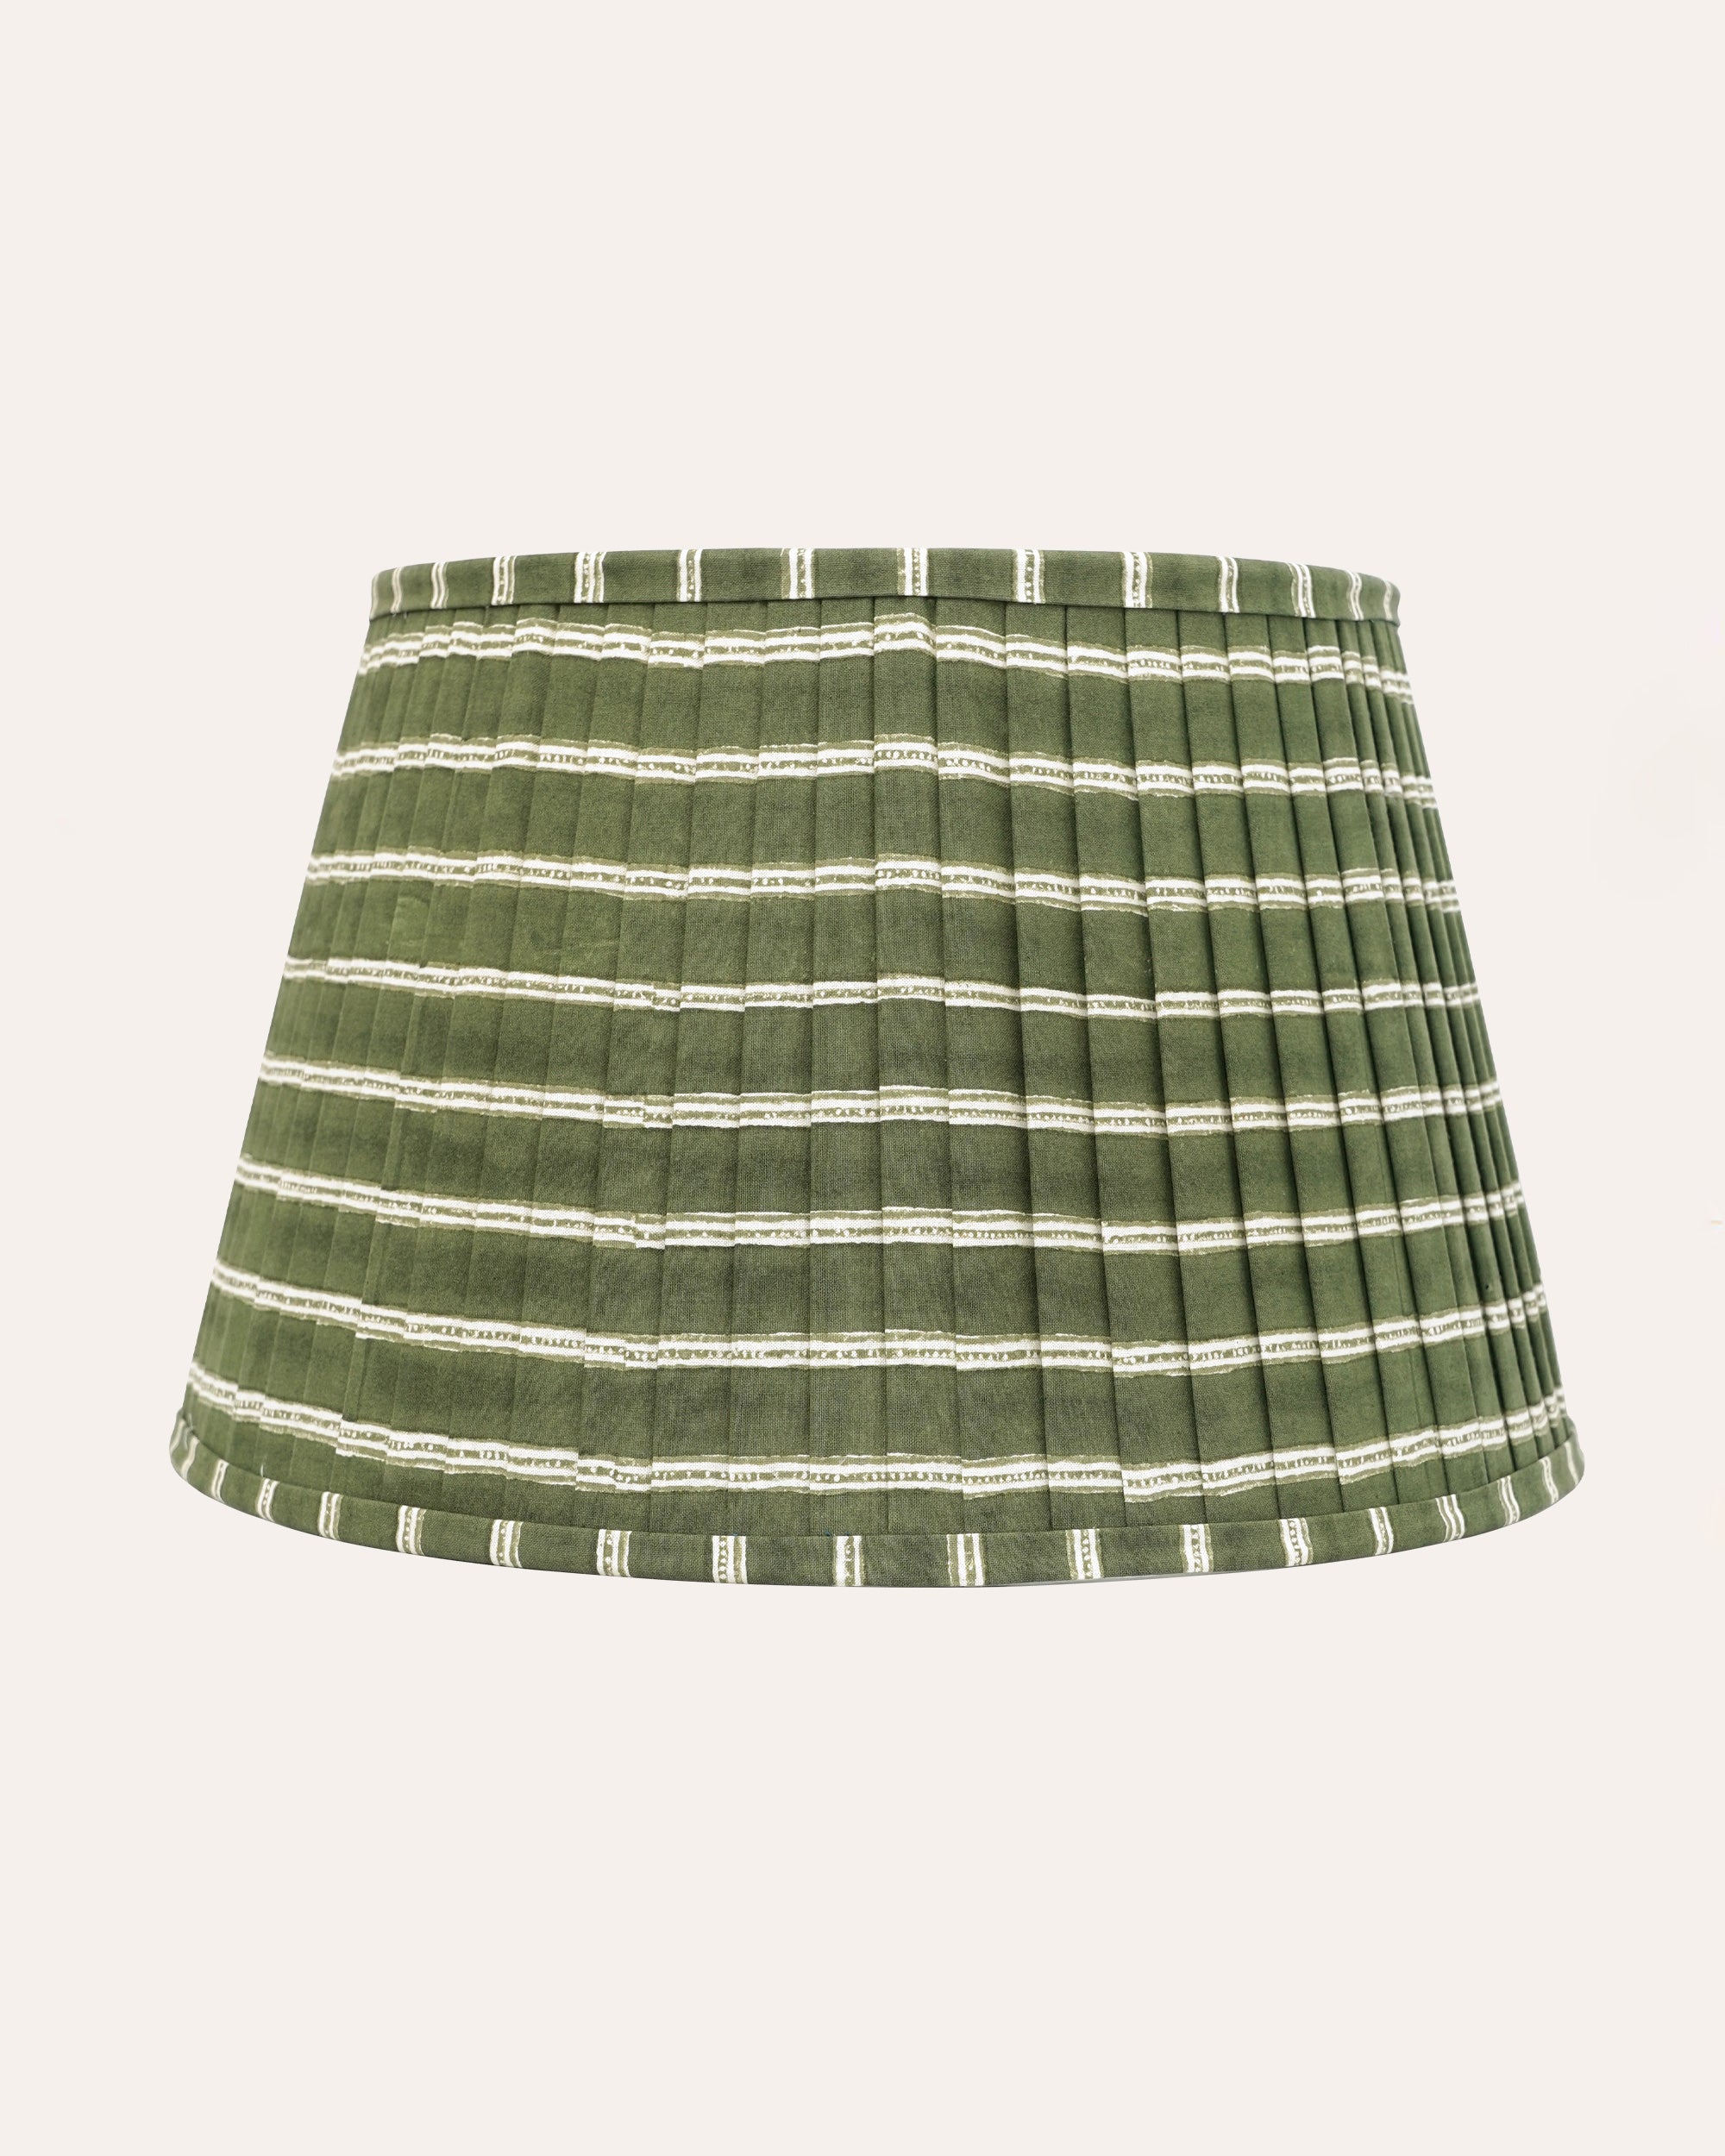 Edo Stripe Pleated Lampshade - Green